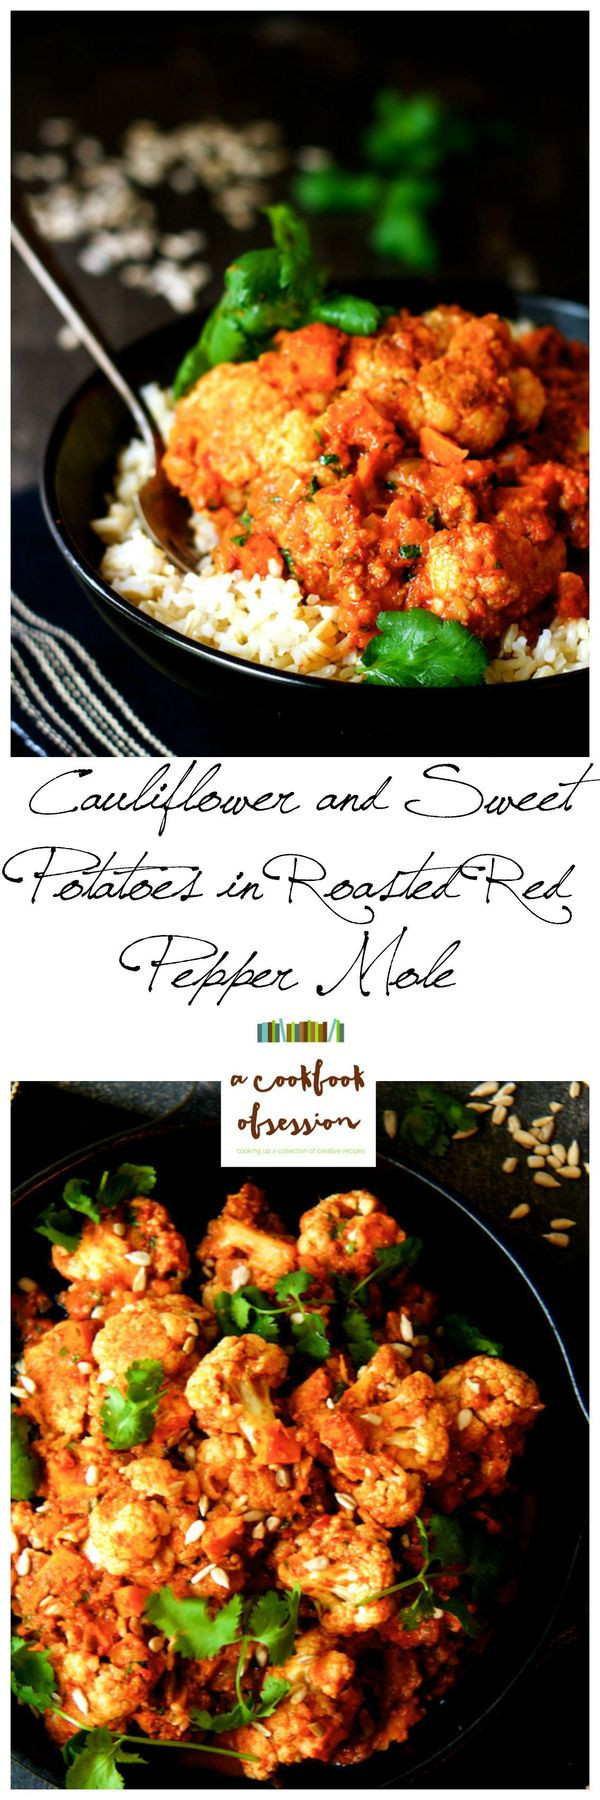 Cauliflower Main Dish Vegetarian Recipes
 Cauliflower and Sweet Potatoes in Roasted Red Pepper Mole